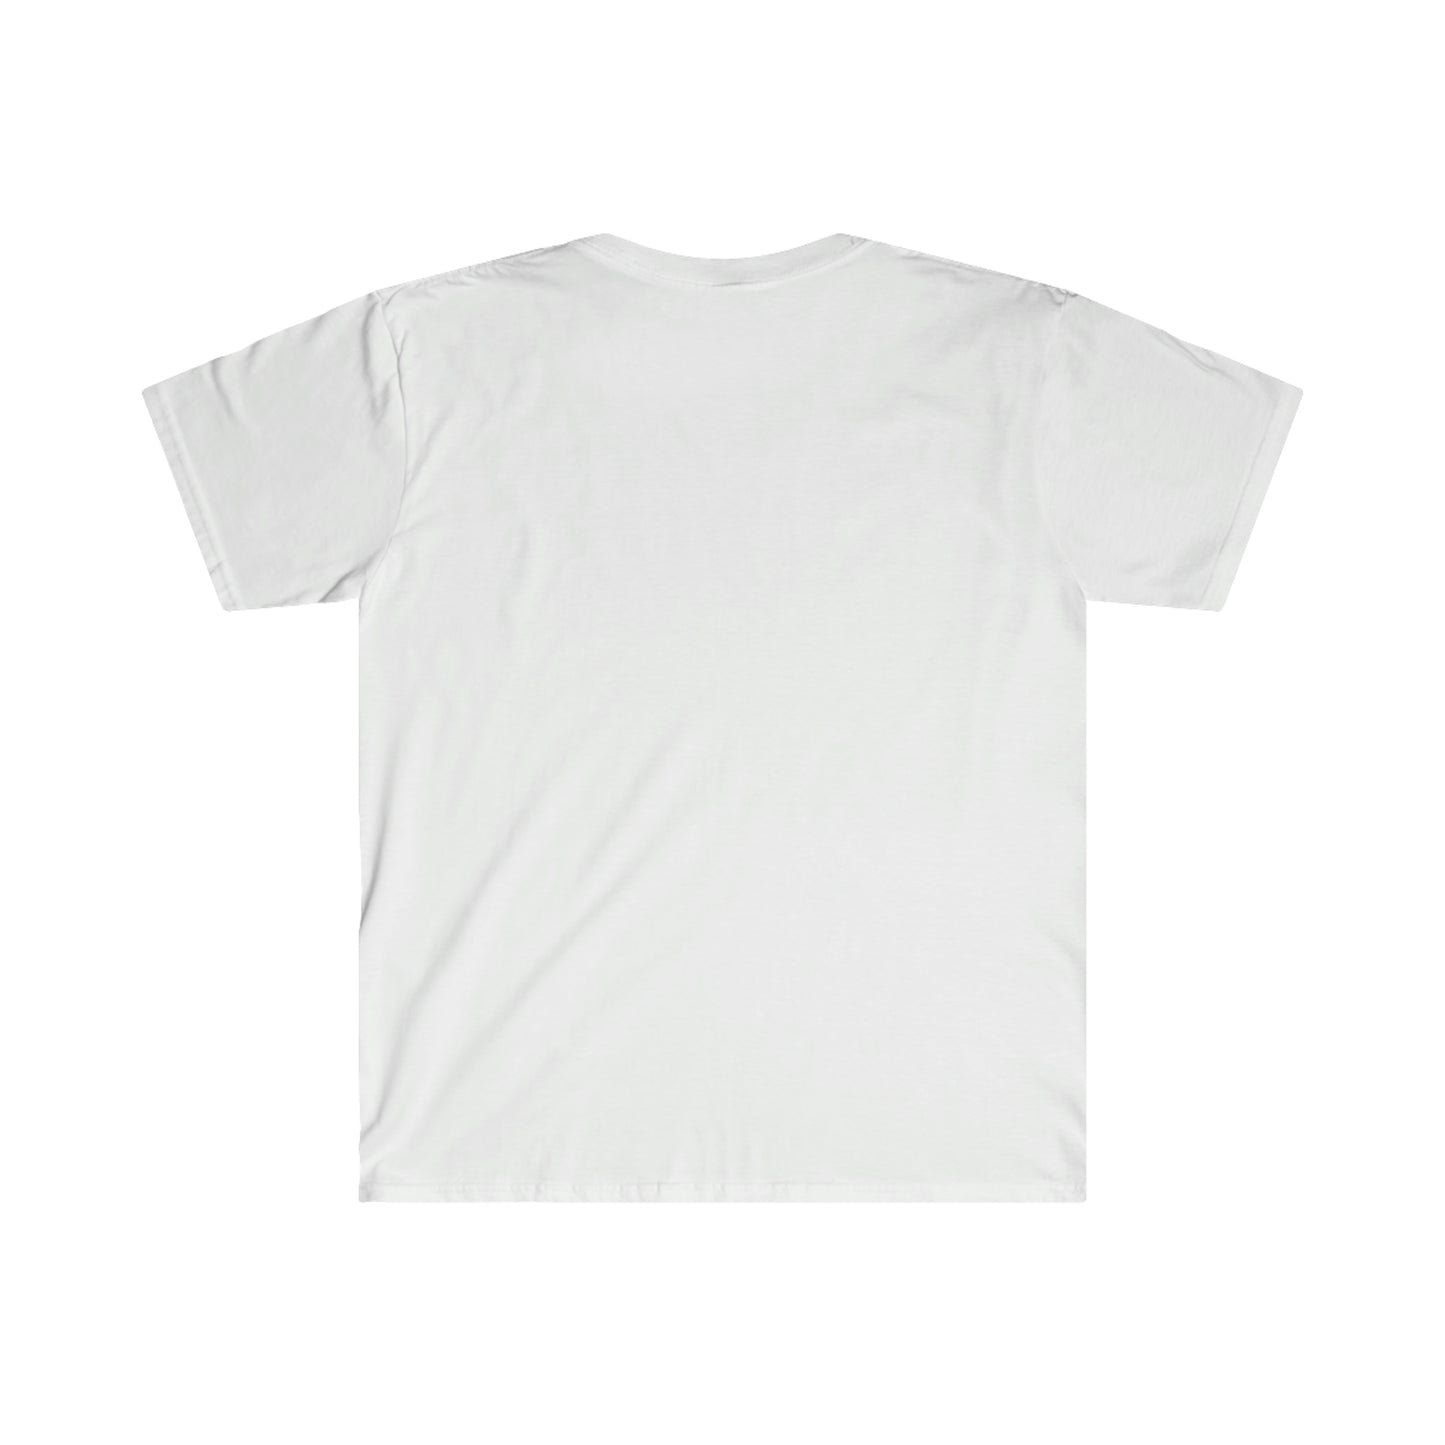 Work For God Unisex Softstyle T-Shirt